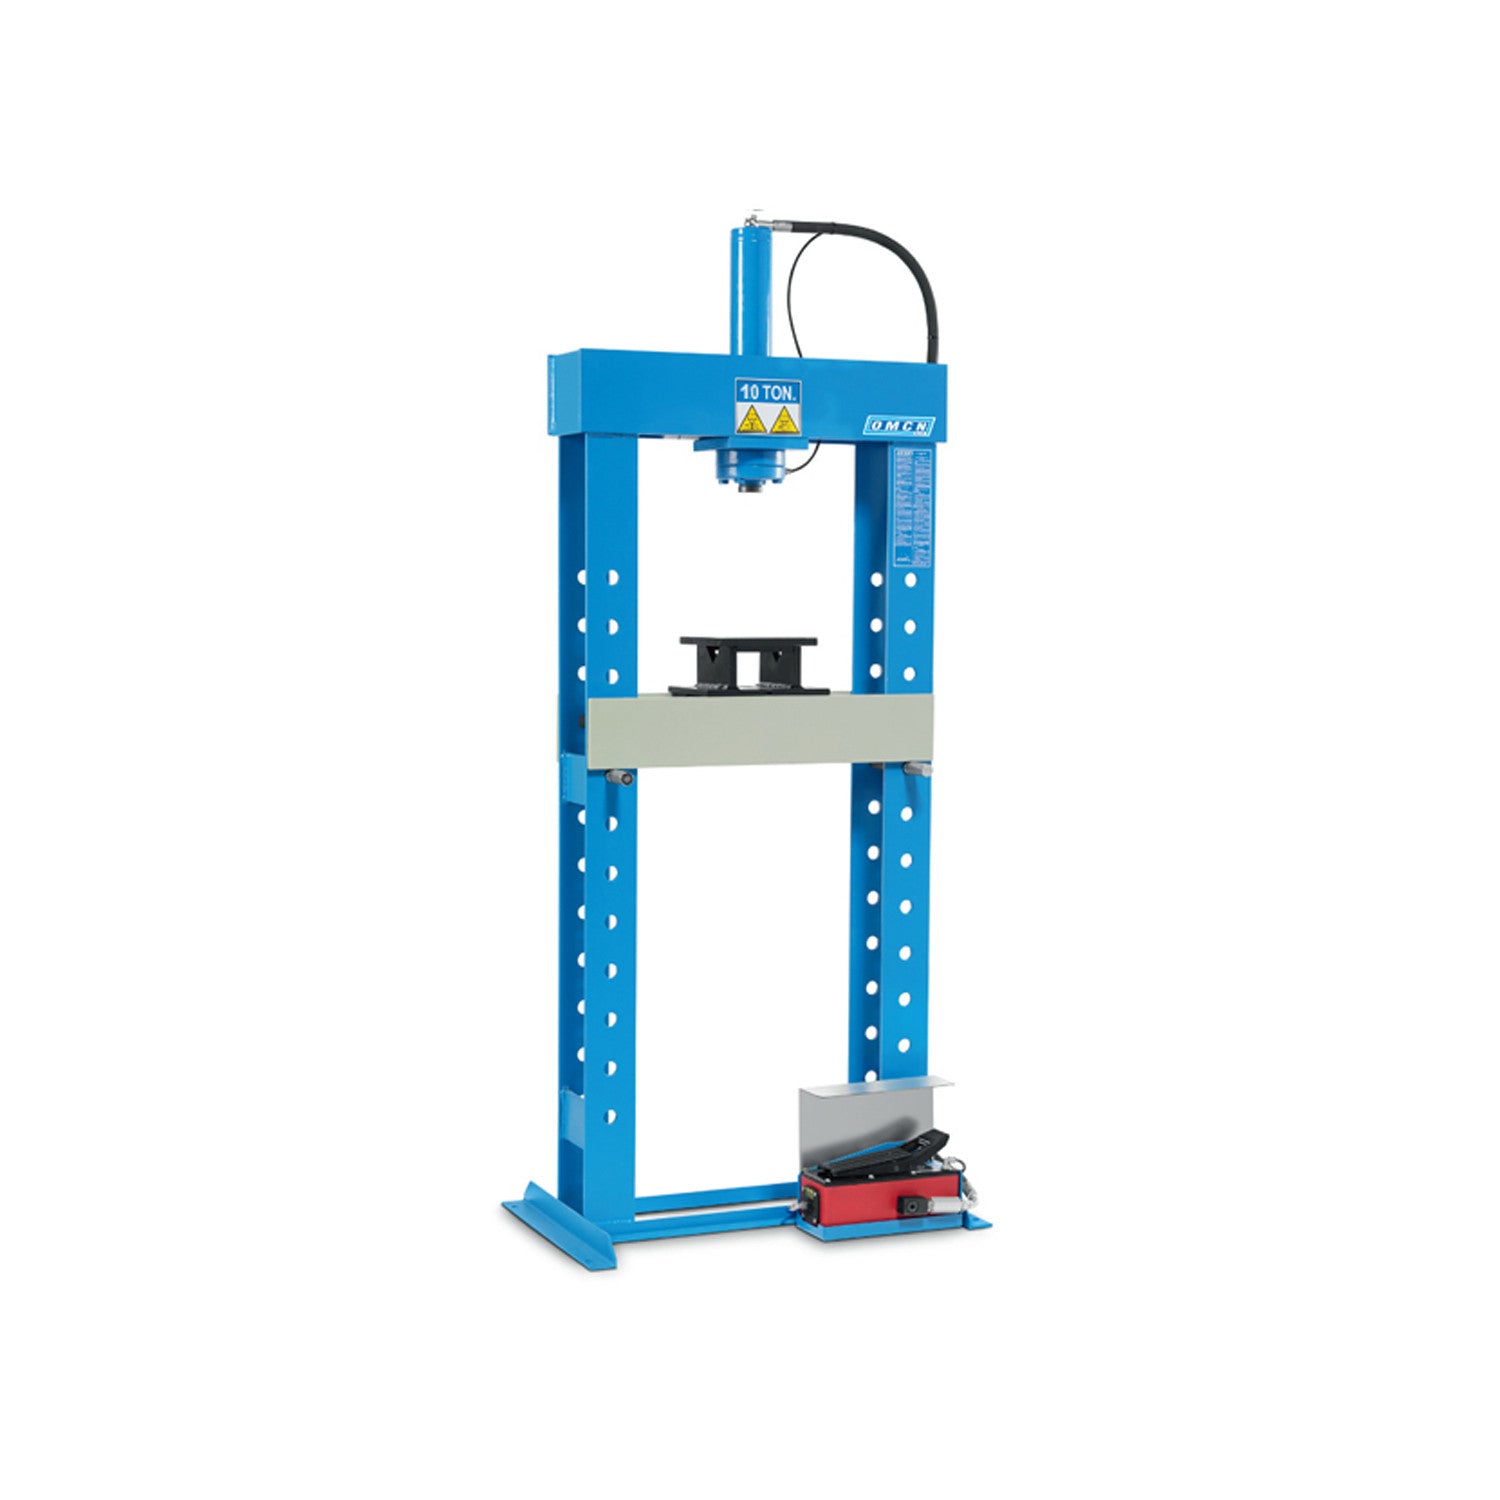 Hydraulic press with hydropneumatic foot pump 10 ton capacity - OMCN 154/IP